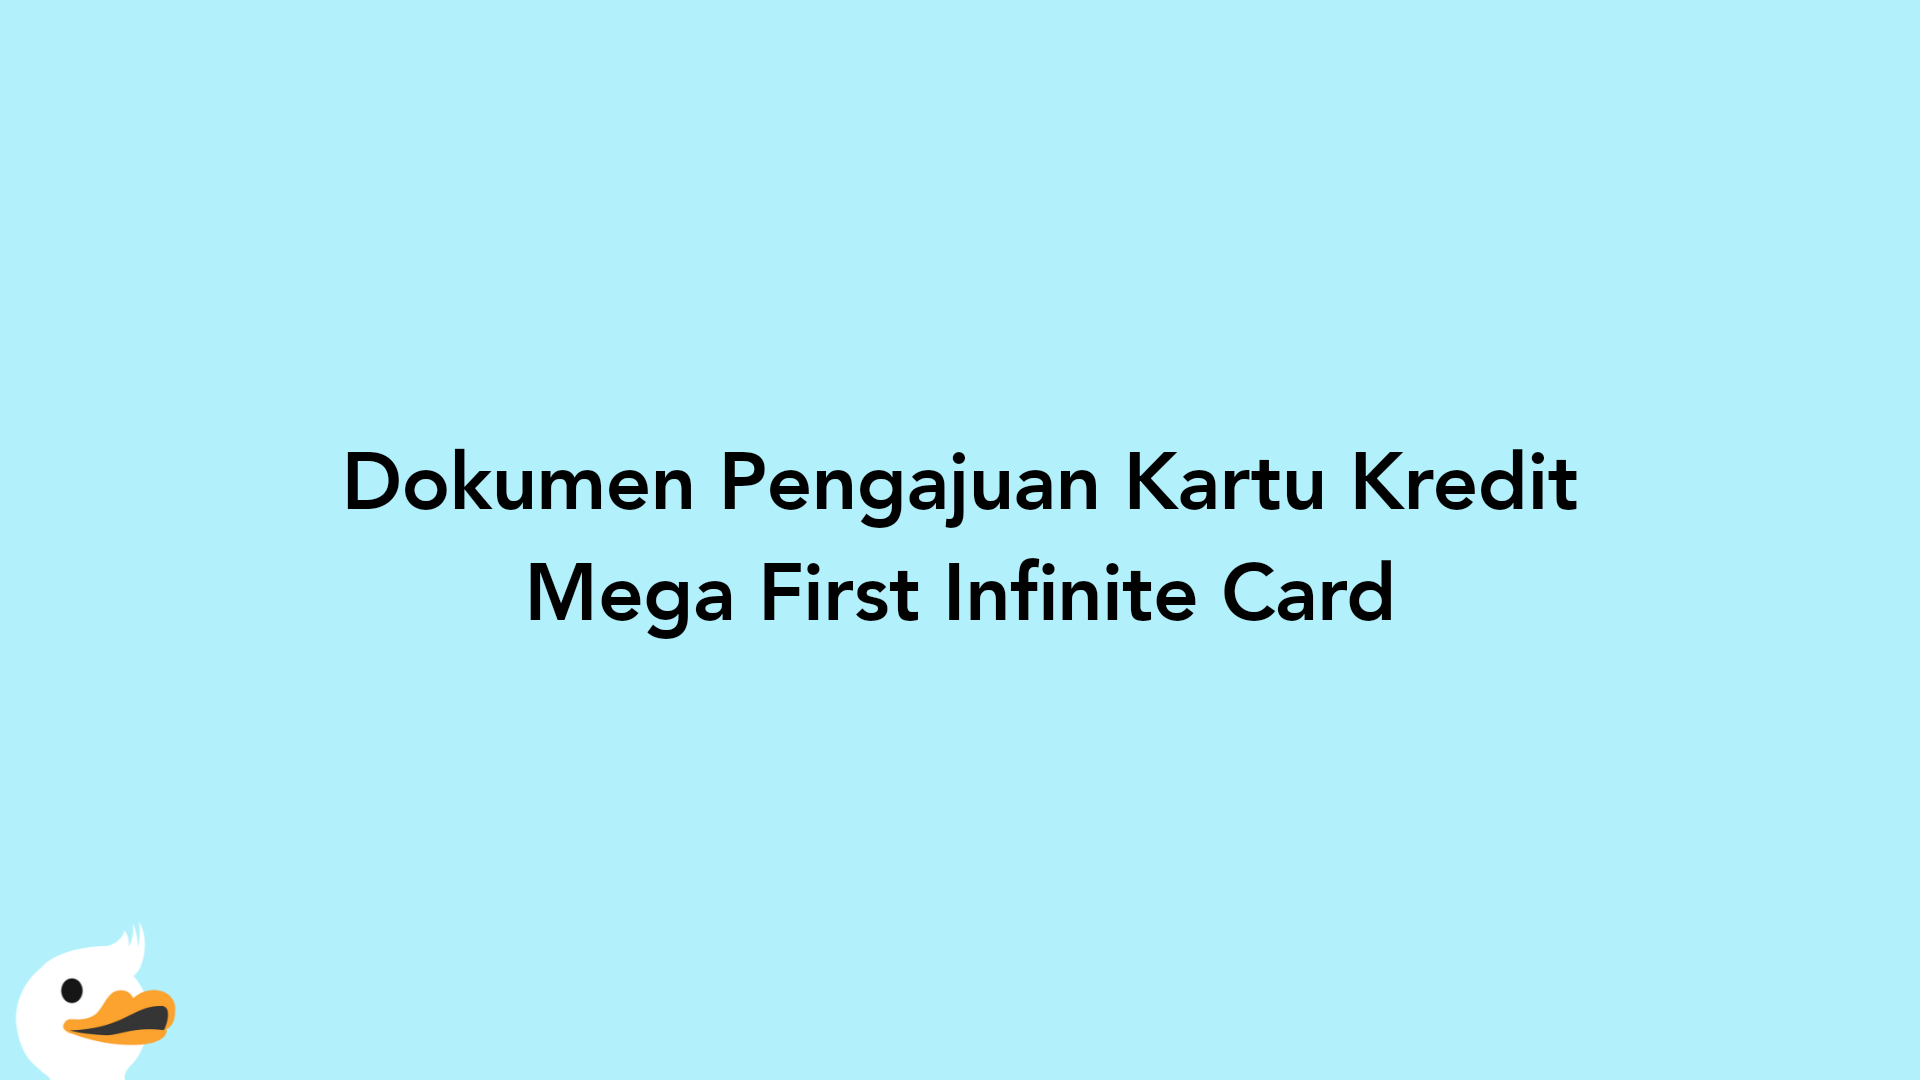 Dokumen Pengajuan Kartu Kredit Mega First Infinite Card